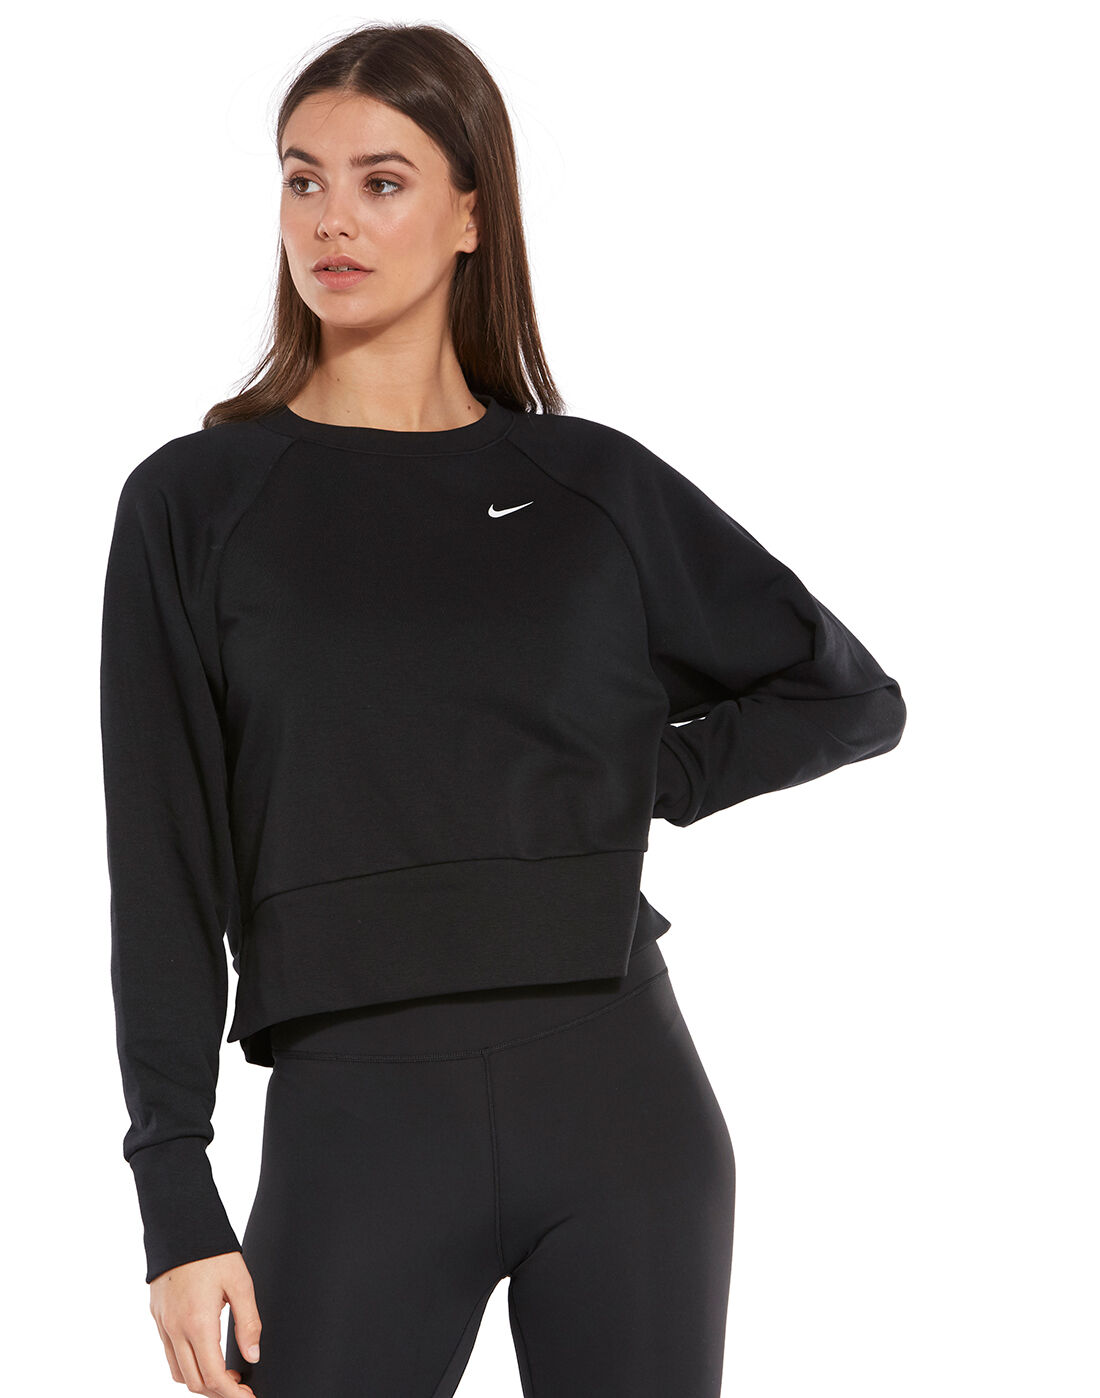 Women's Black Nike Versa Sweatshirt 